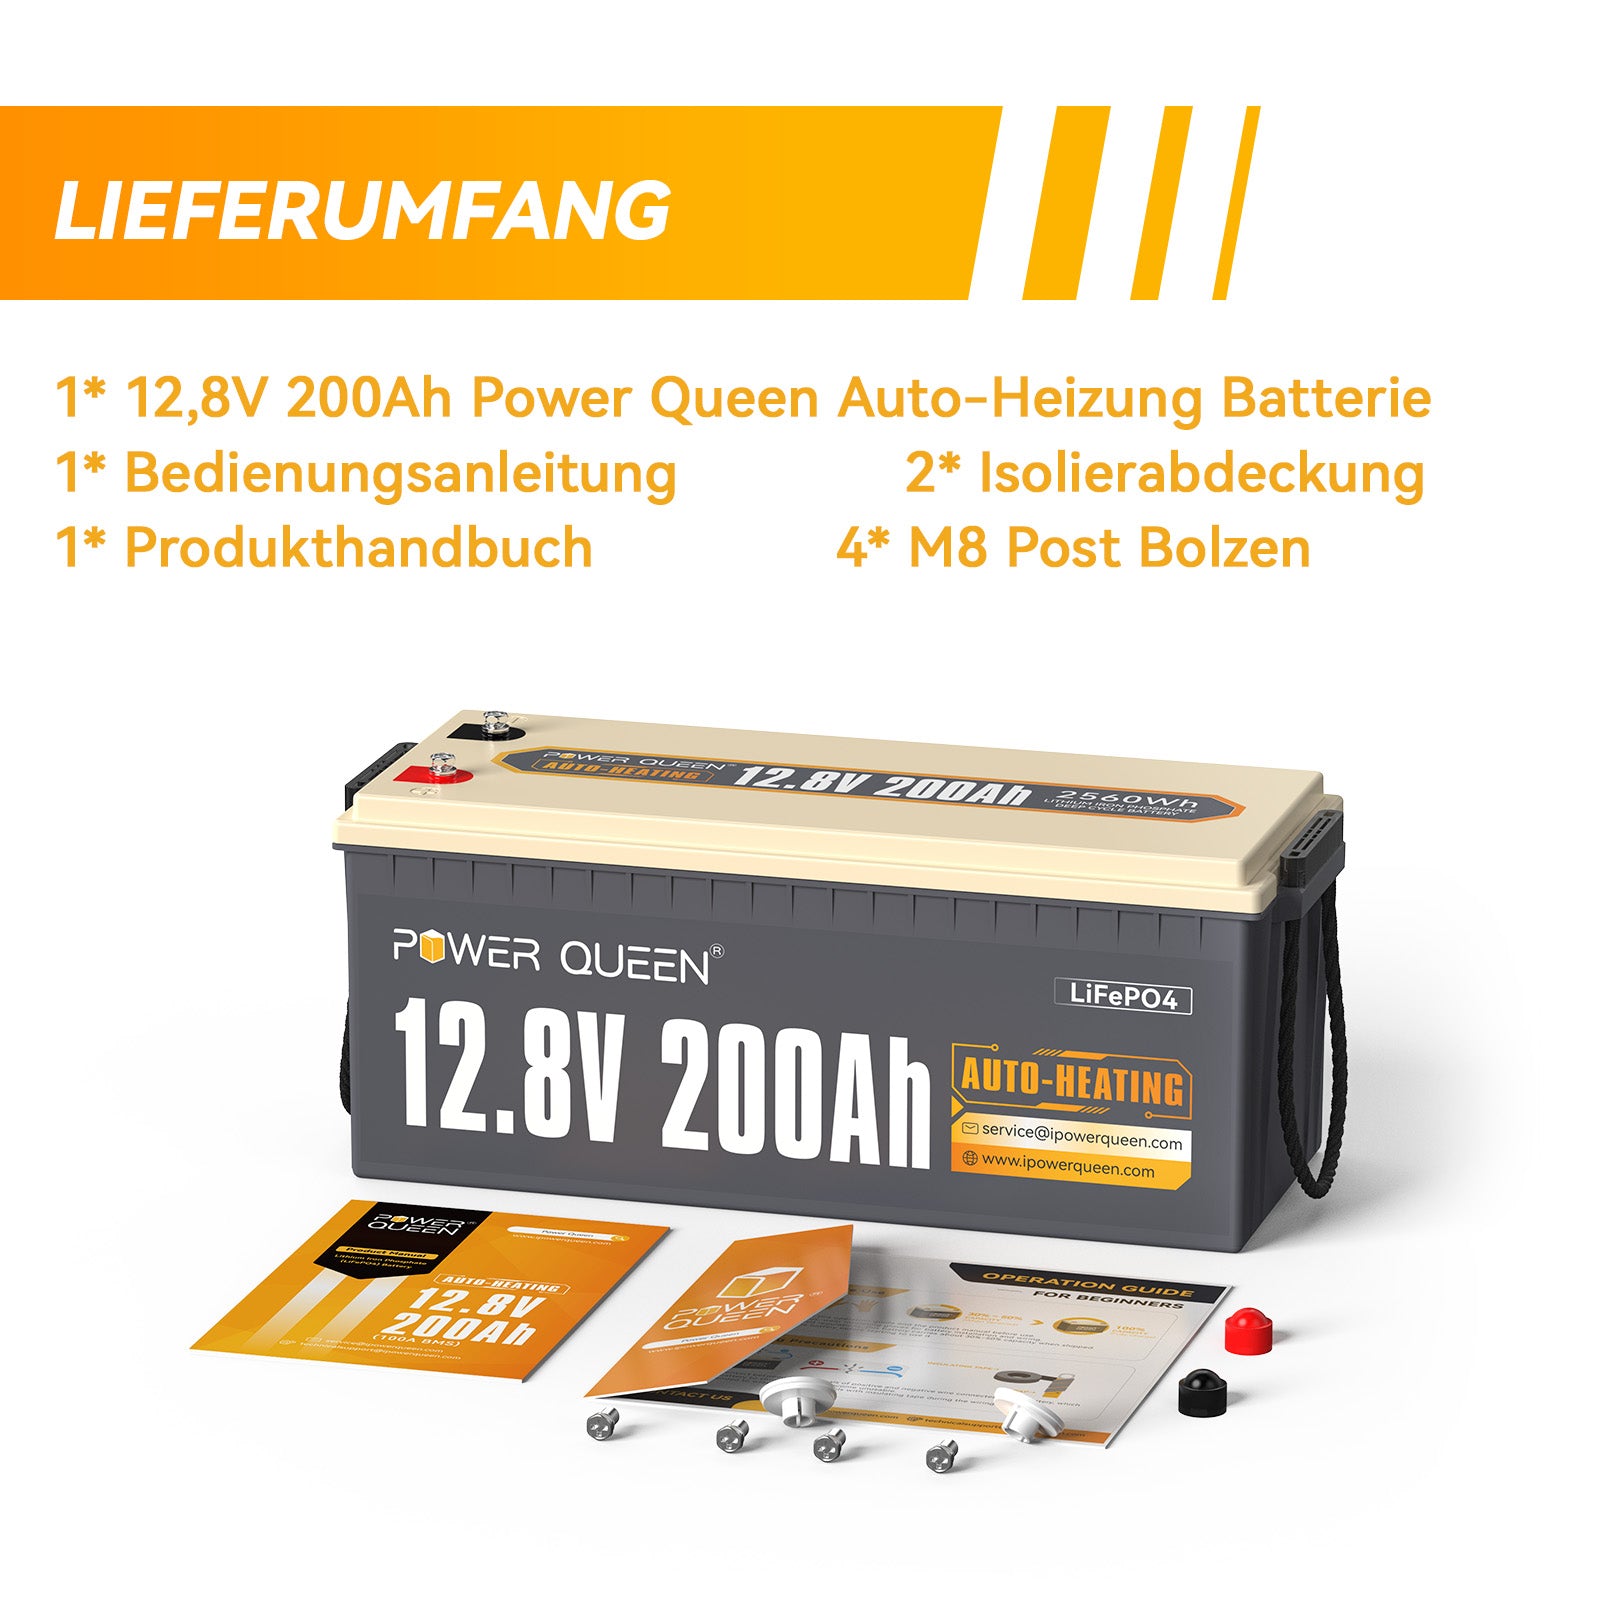 【0% VAT】Power Queen 12.8V 200Ah Self-Heating LiFePO4 Battery, Built-in 100A BMS